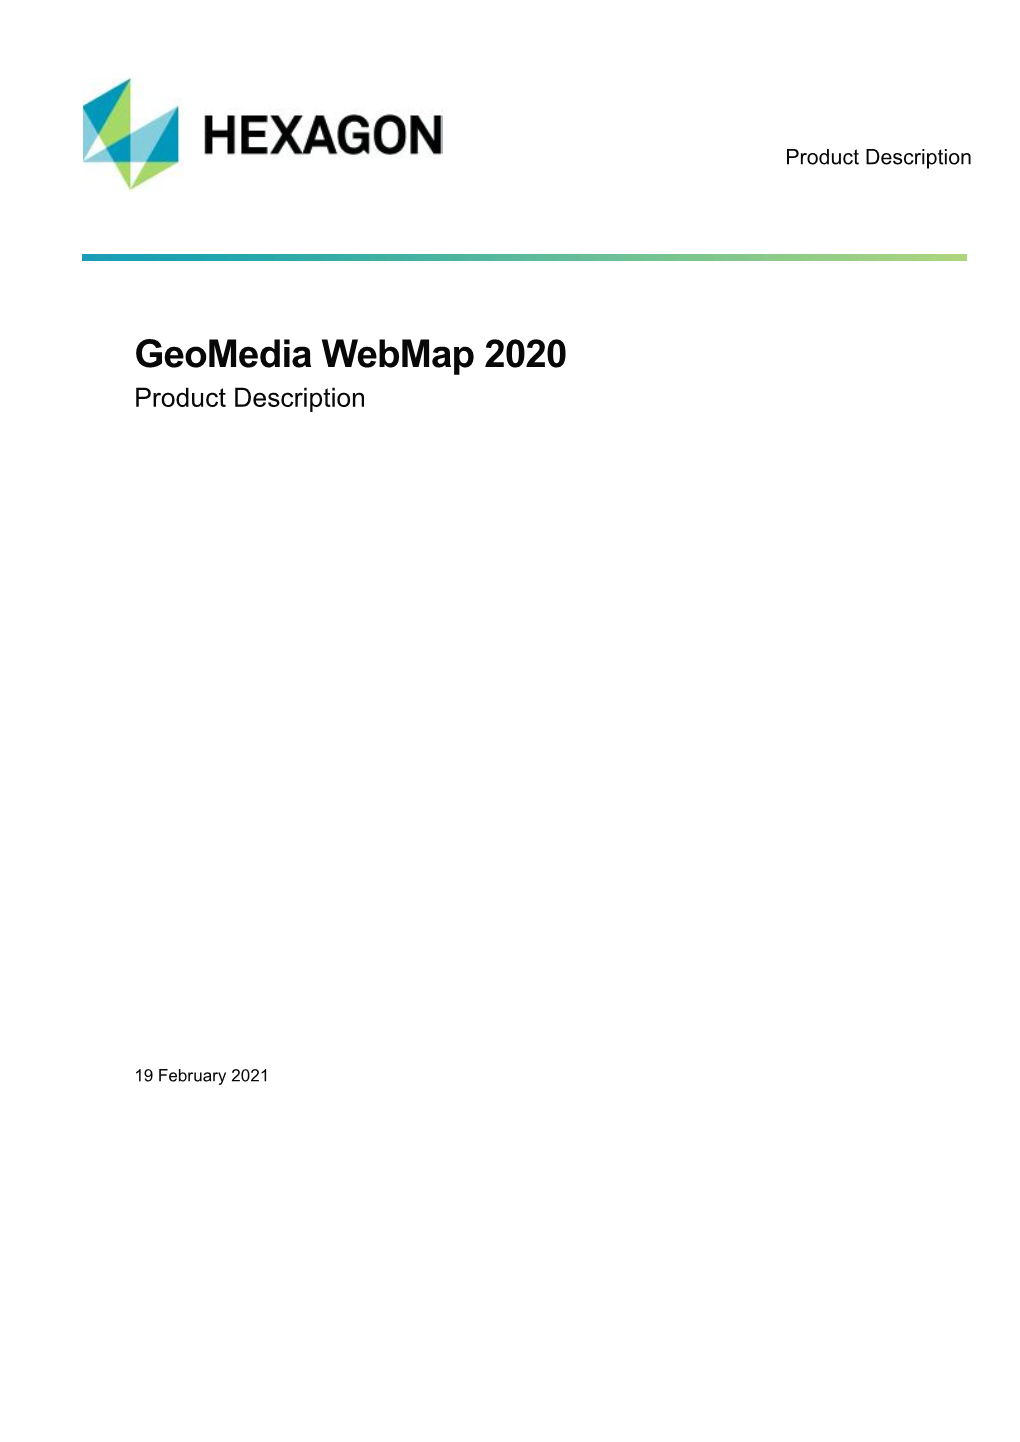 Geomedia Webmap 2020 Product Description